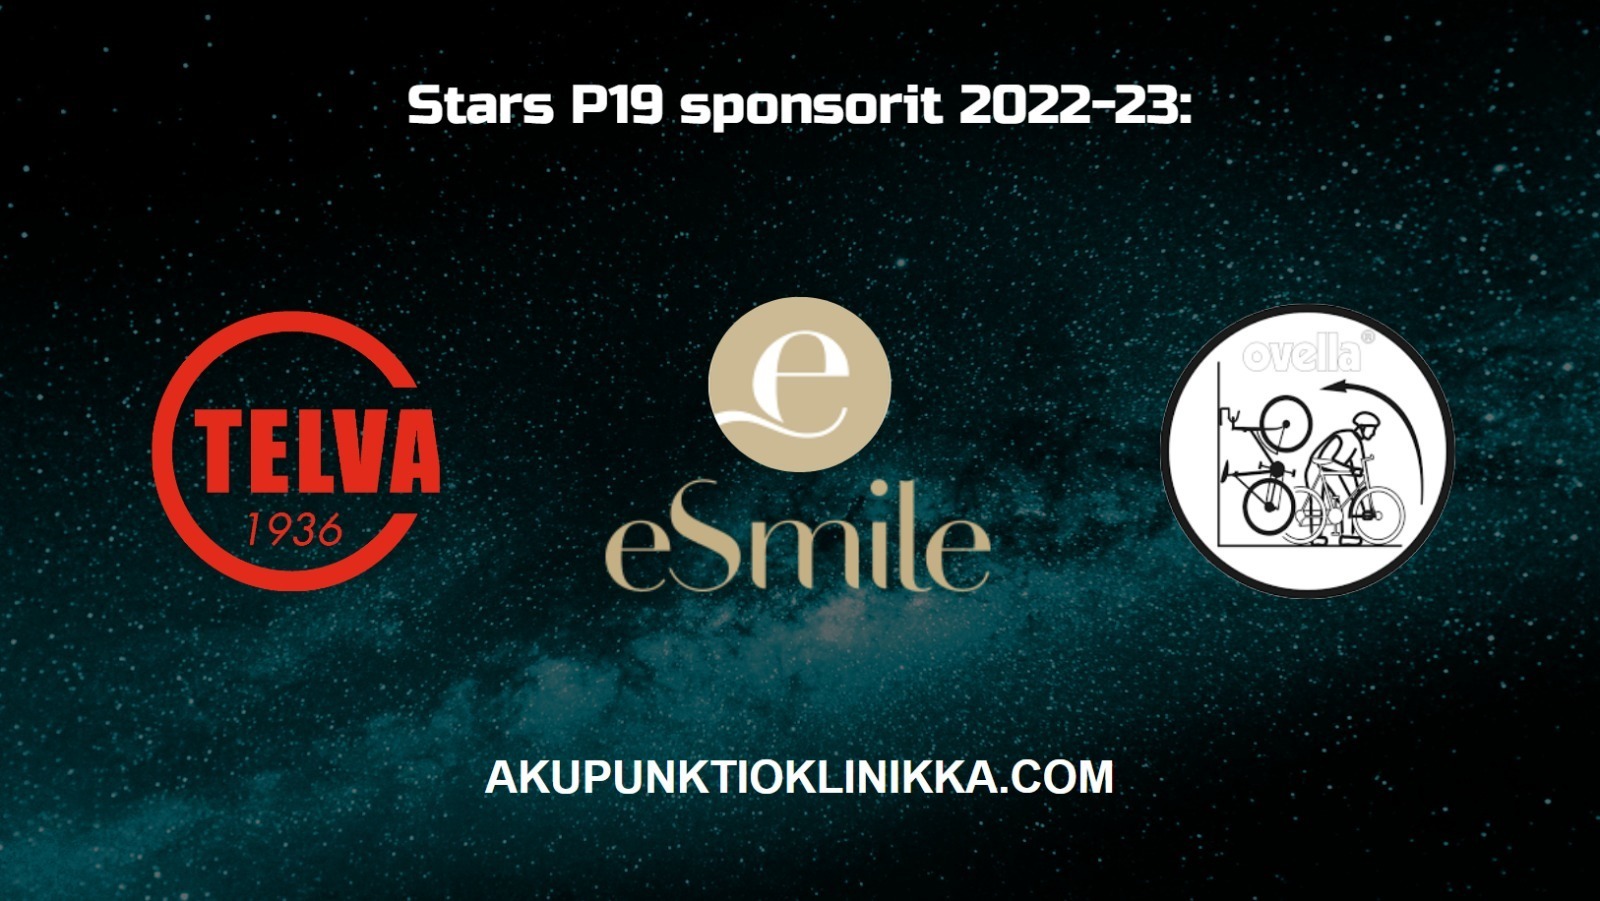 Stars P19 -sponsorit